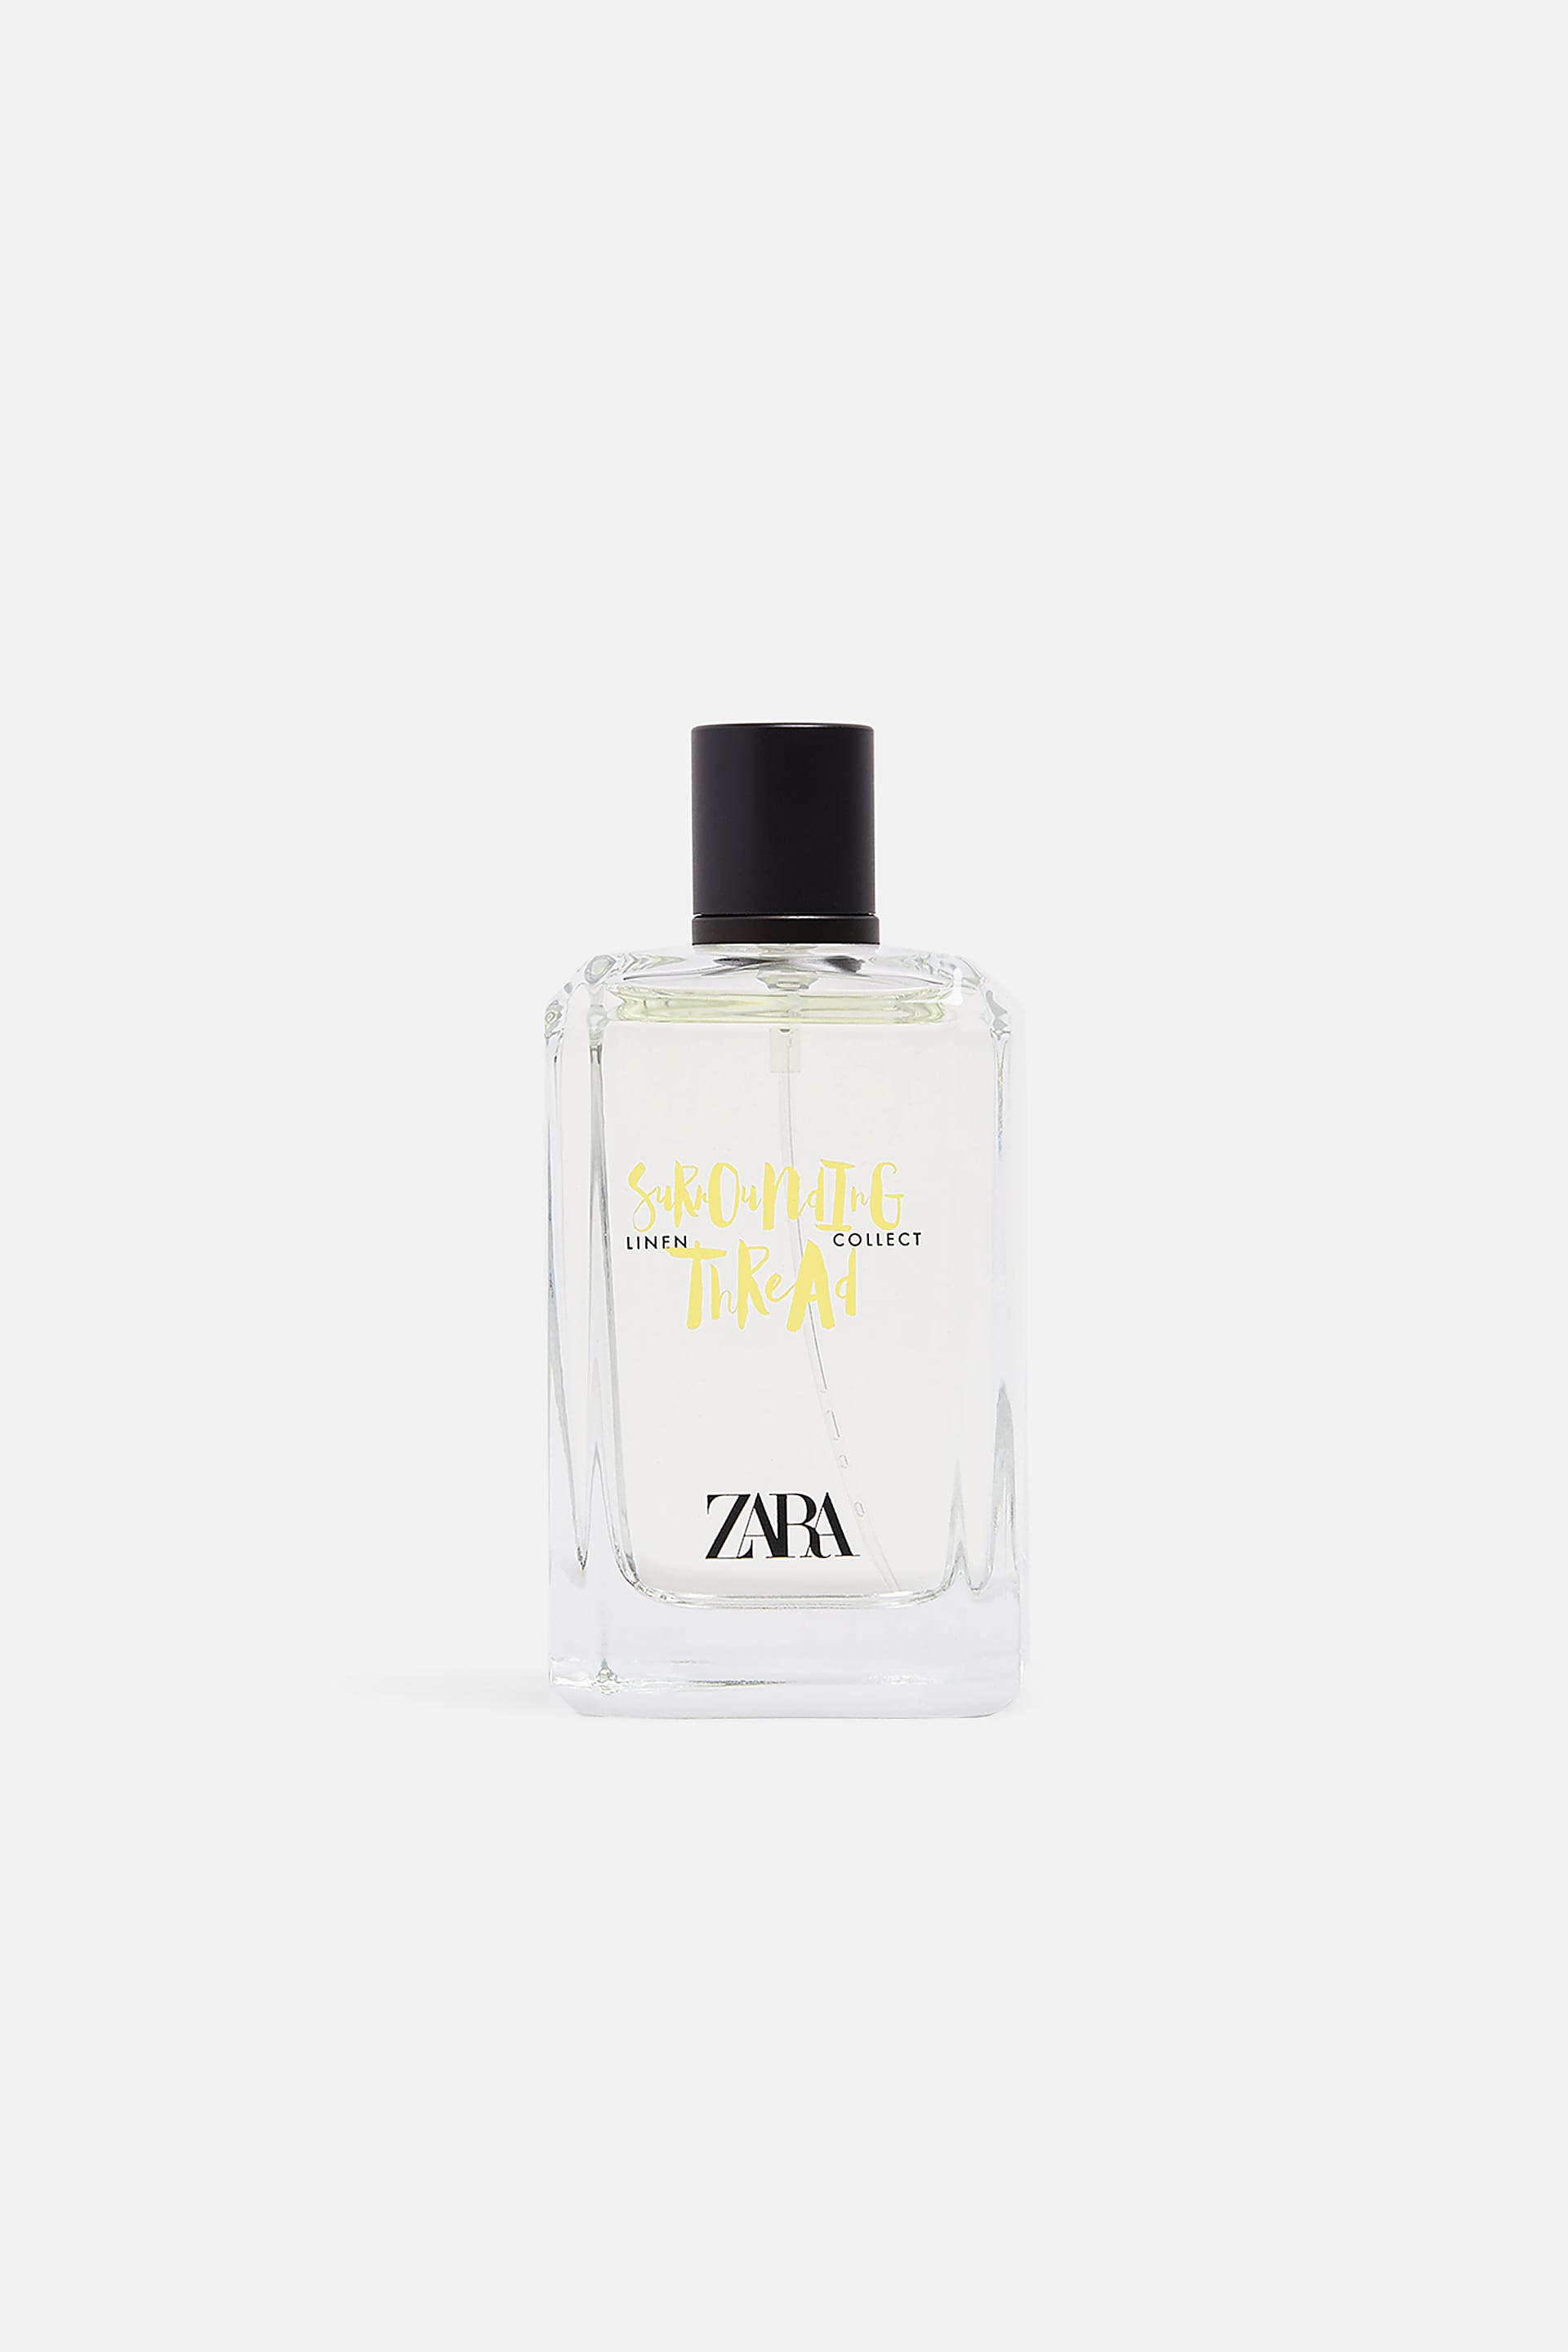 Surrounding Thread Zara perfume - a new 